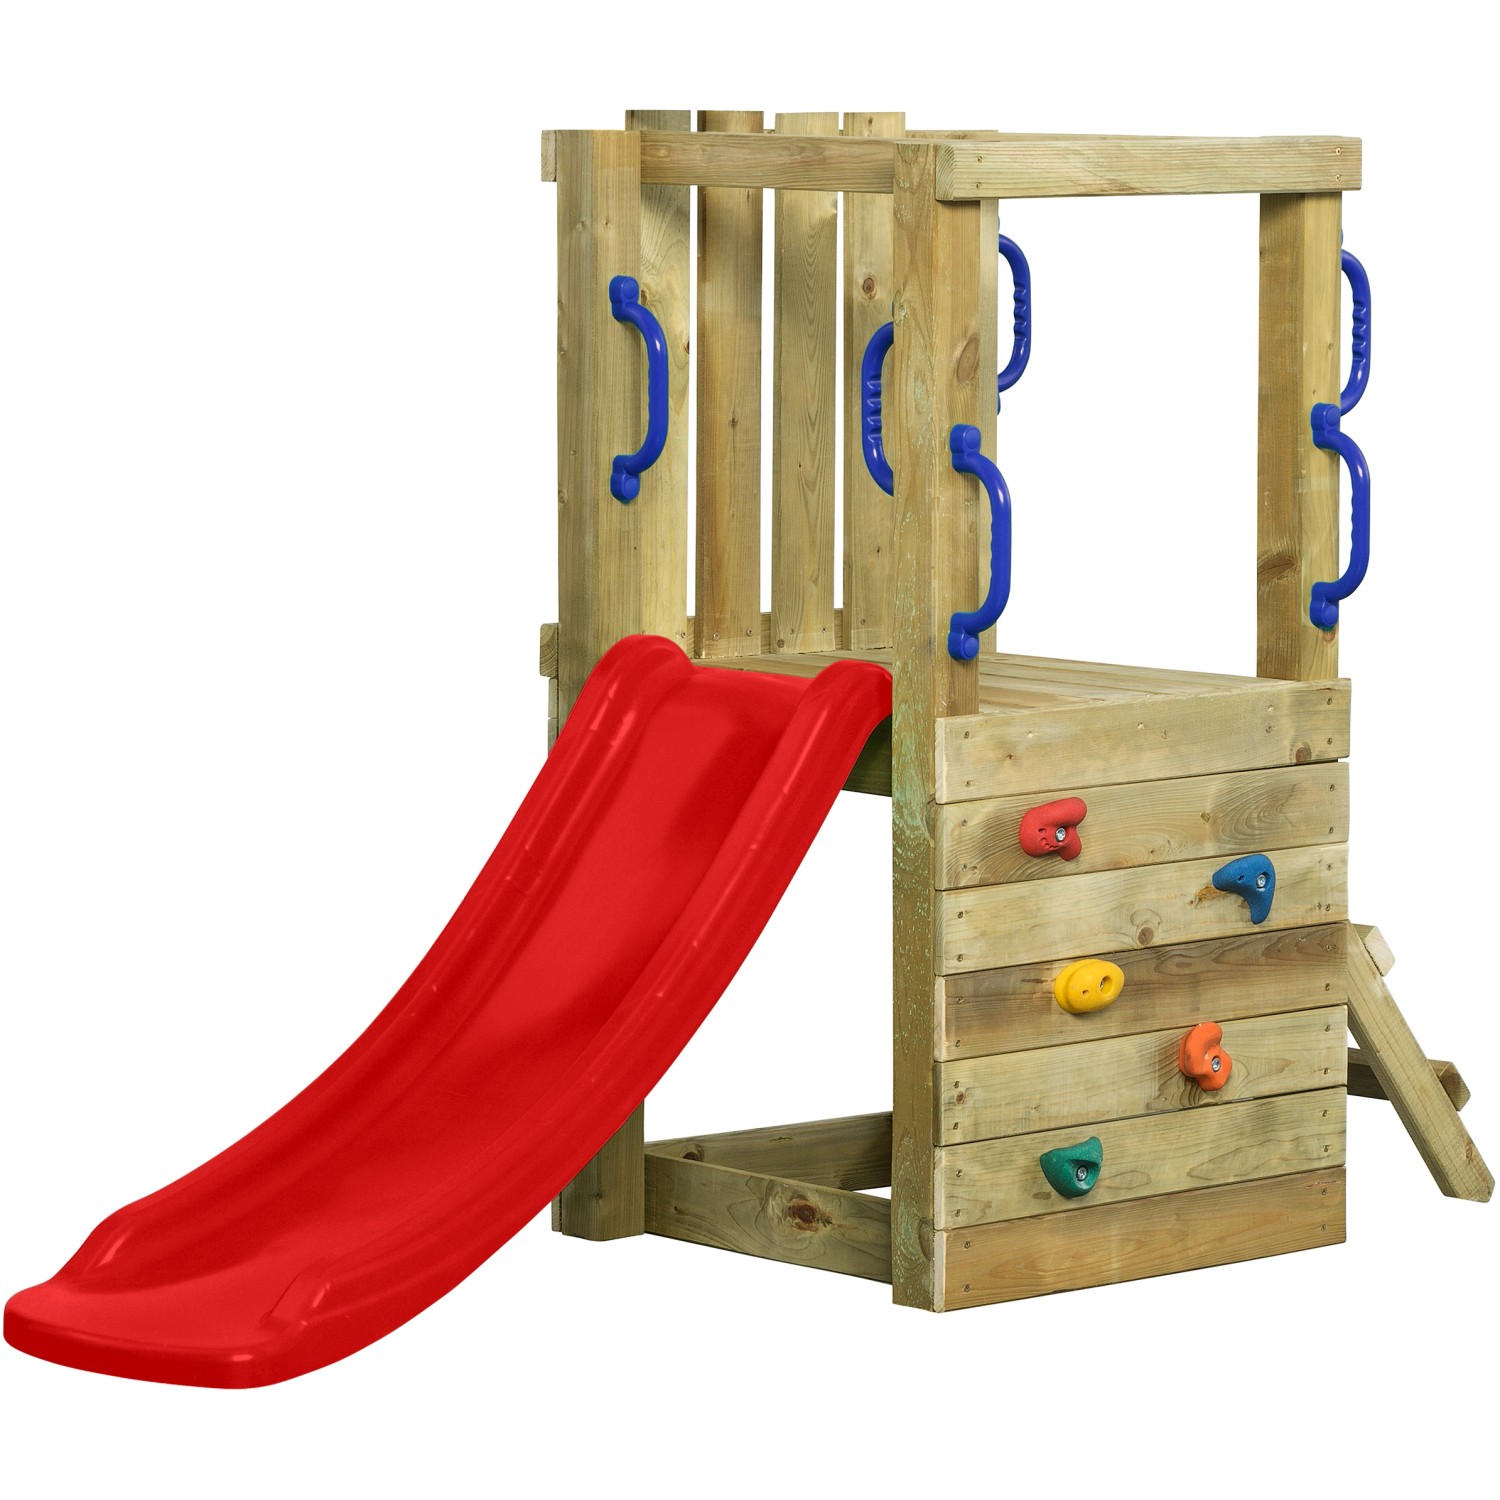 SwingKing Spielturm Irma Small mit Rutsche Rot 66 cm x 190 cm x 125 cm von SwingKing